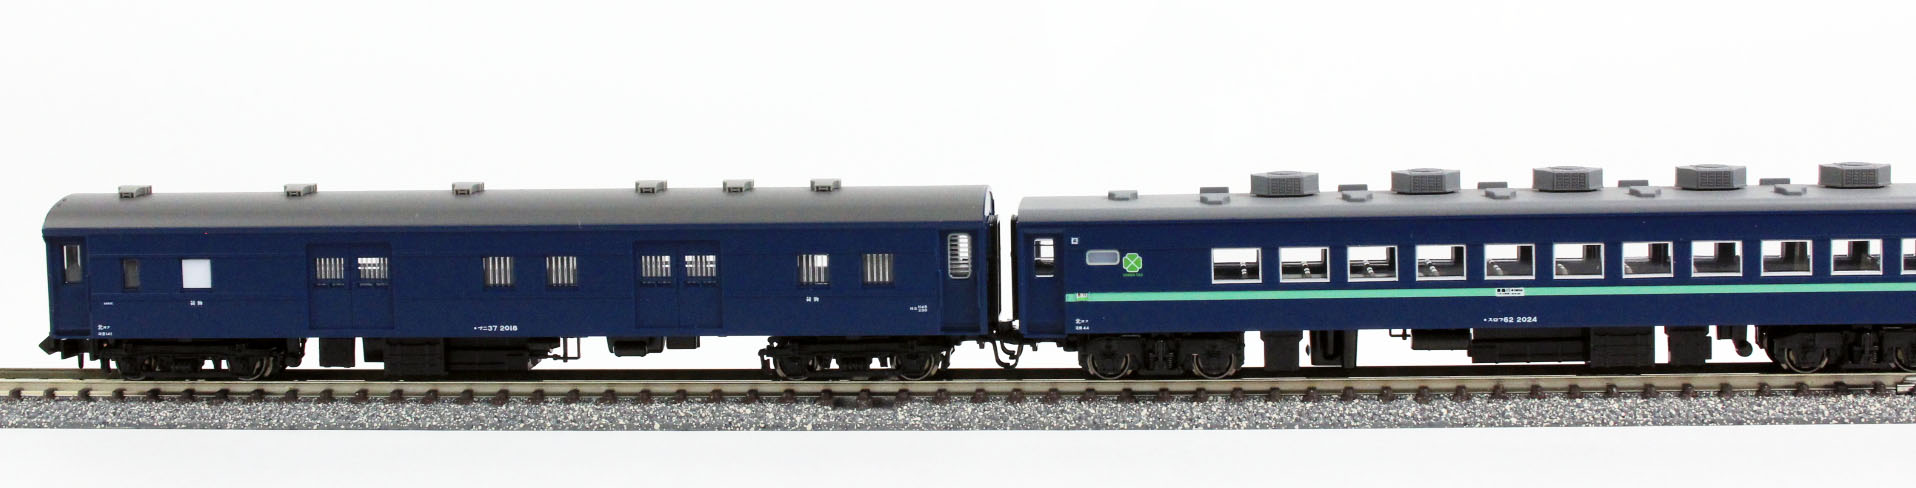 KATO 10-879 急行「津軽」 6両基本セット 鉄道模型 Nゲージ | 鉄道模型 